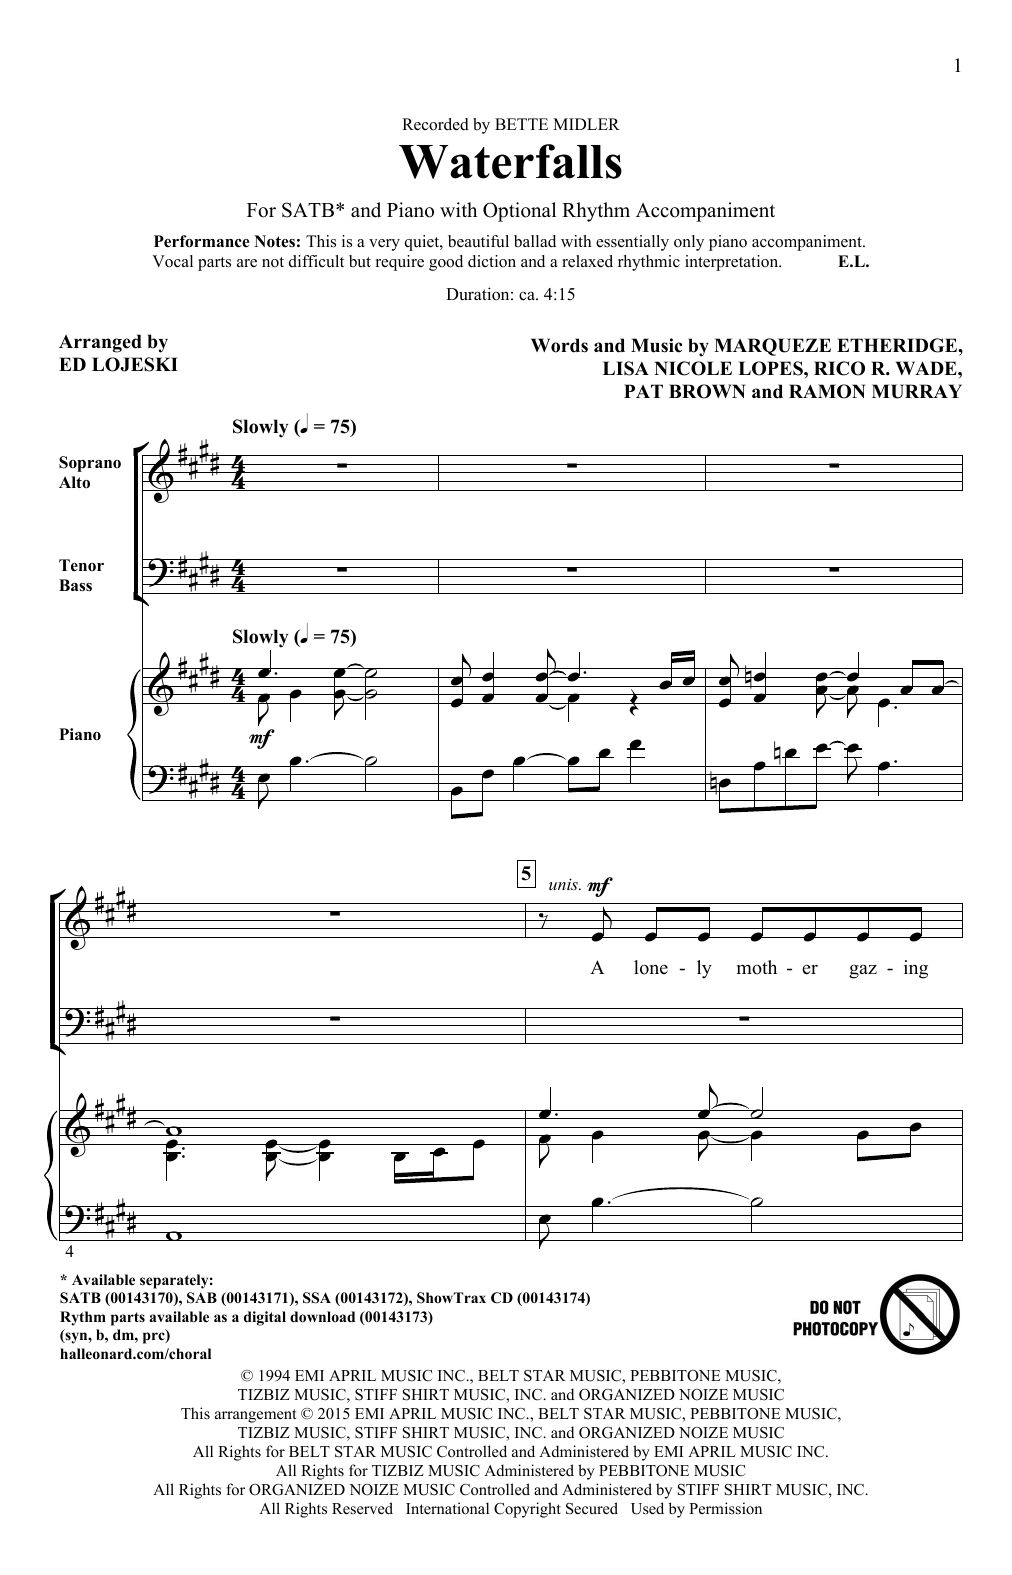 Ed Lojeski Waterfalls sheet music notes and chords arranged for SAB Choir